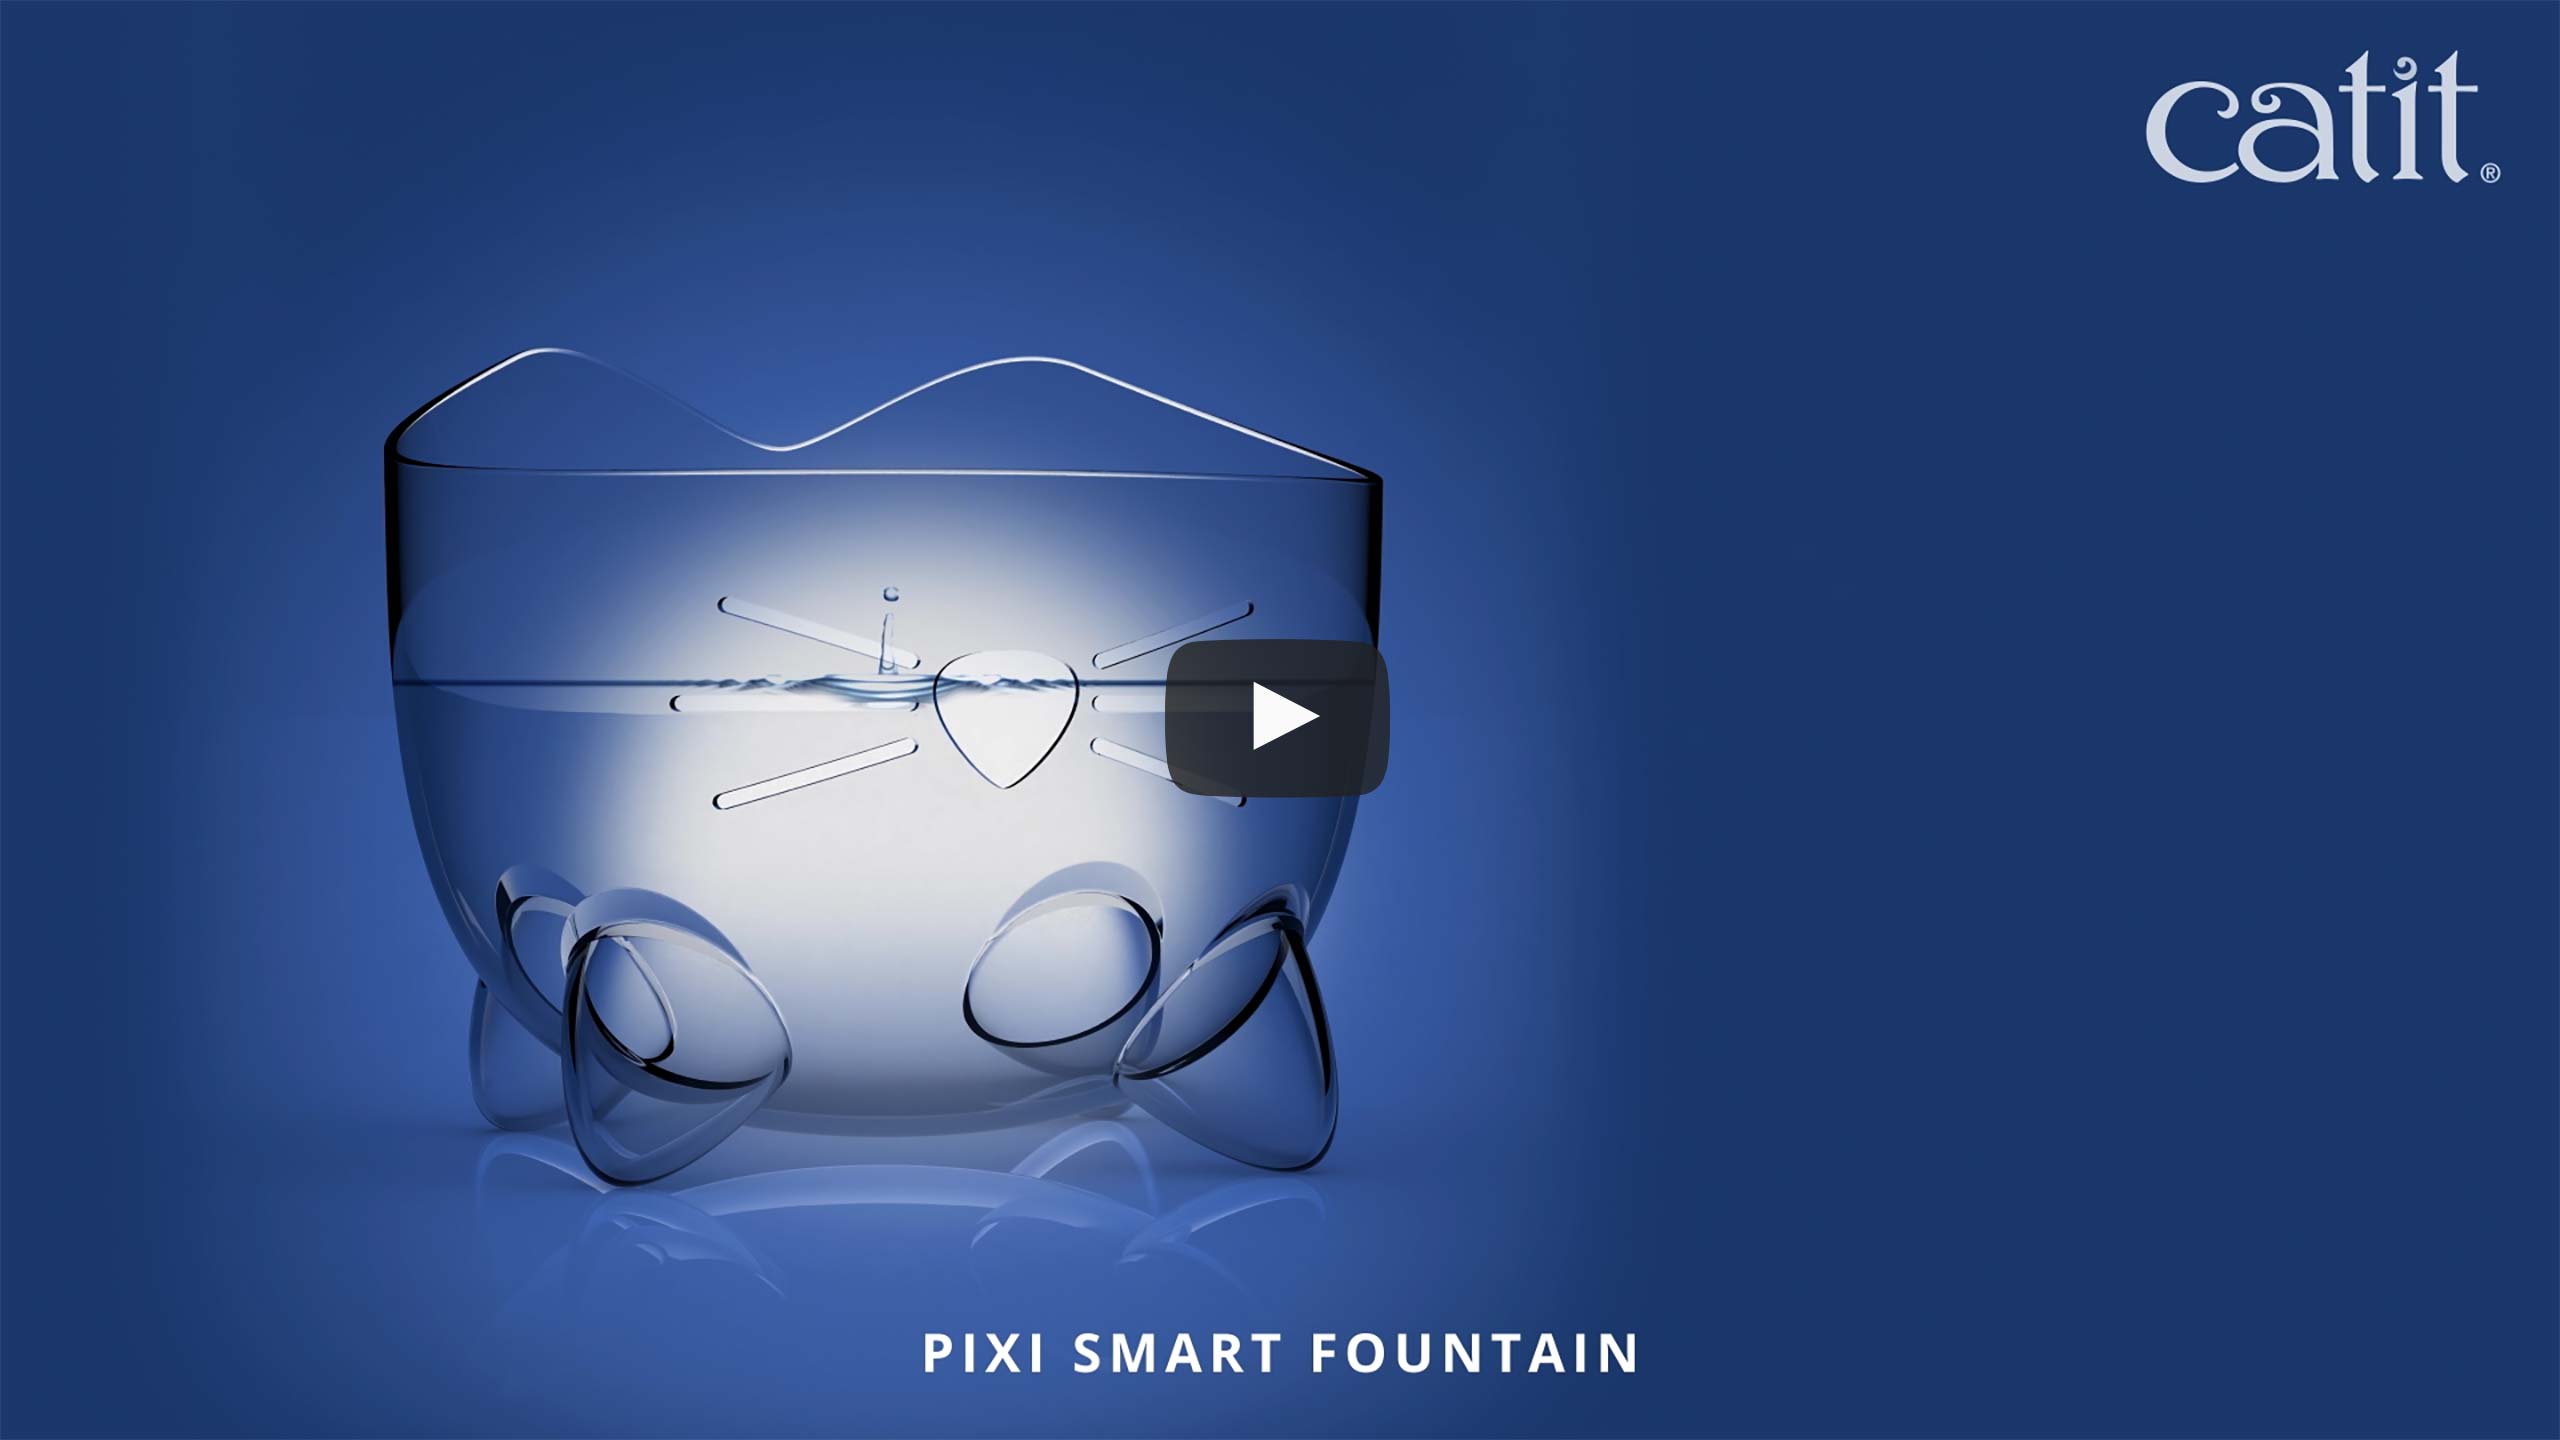 Catit PIXI Smart Fountain video